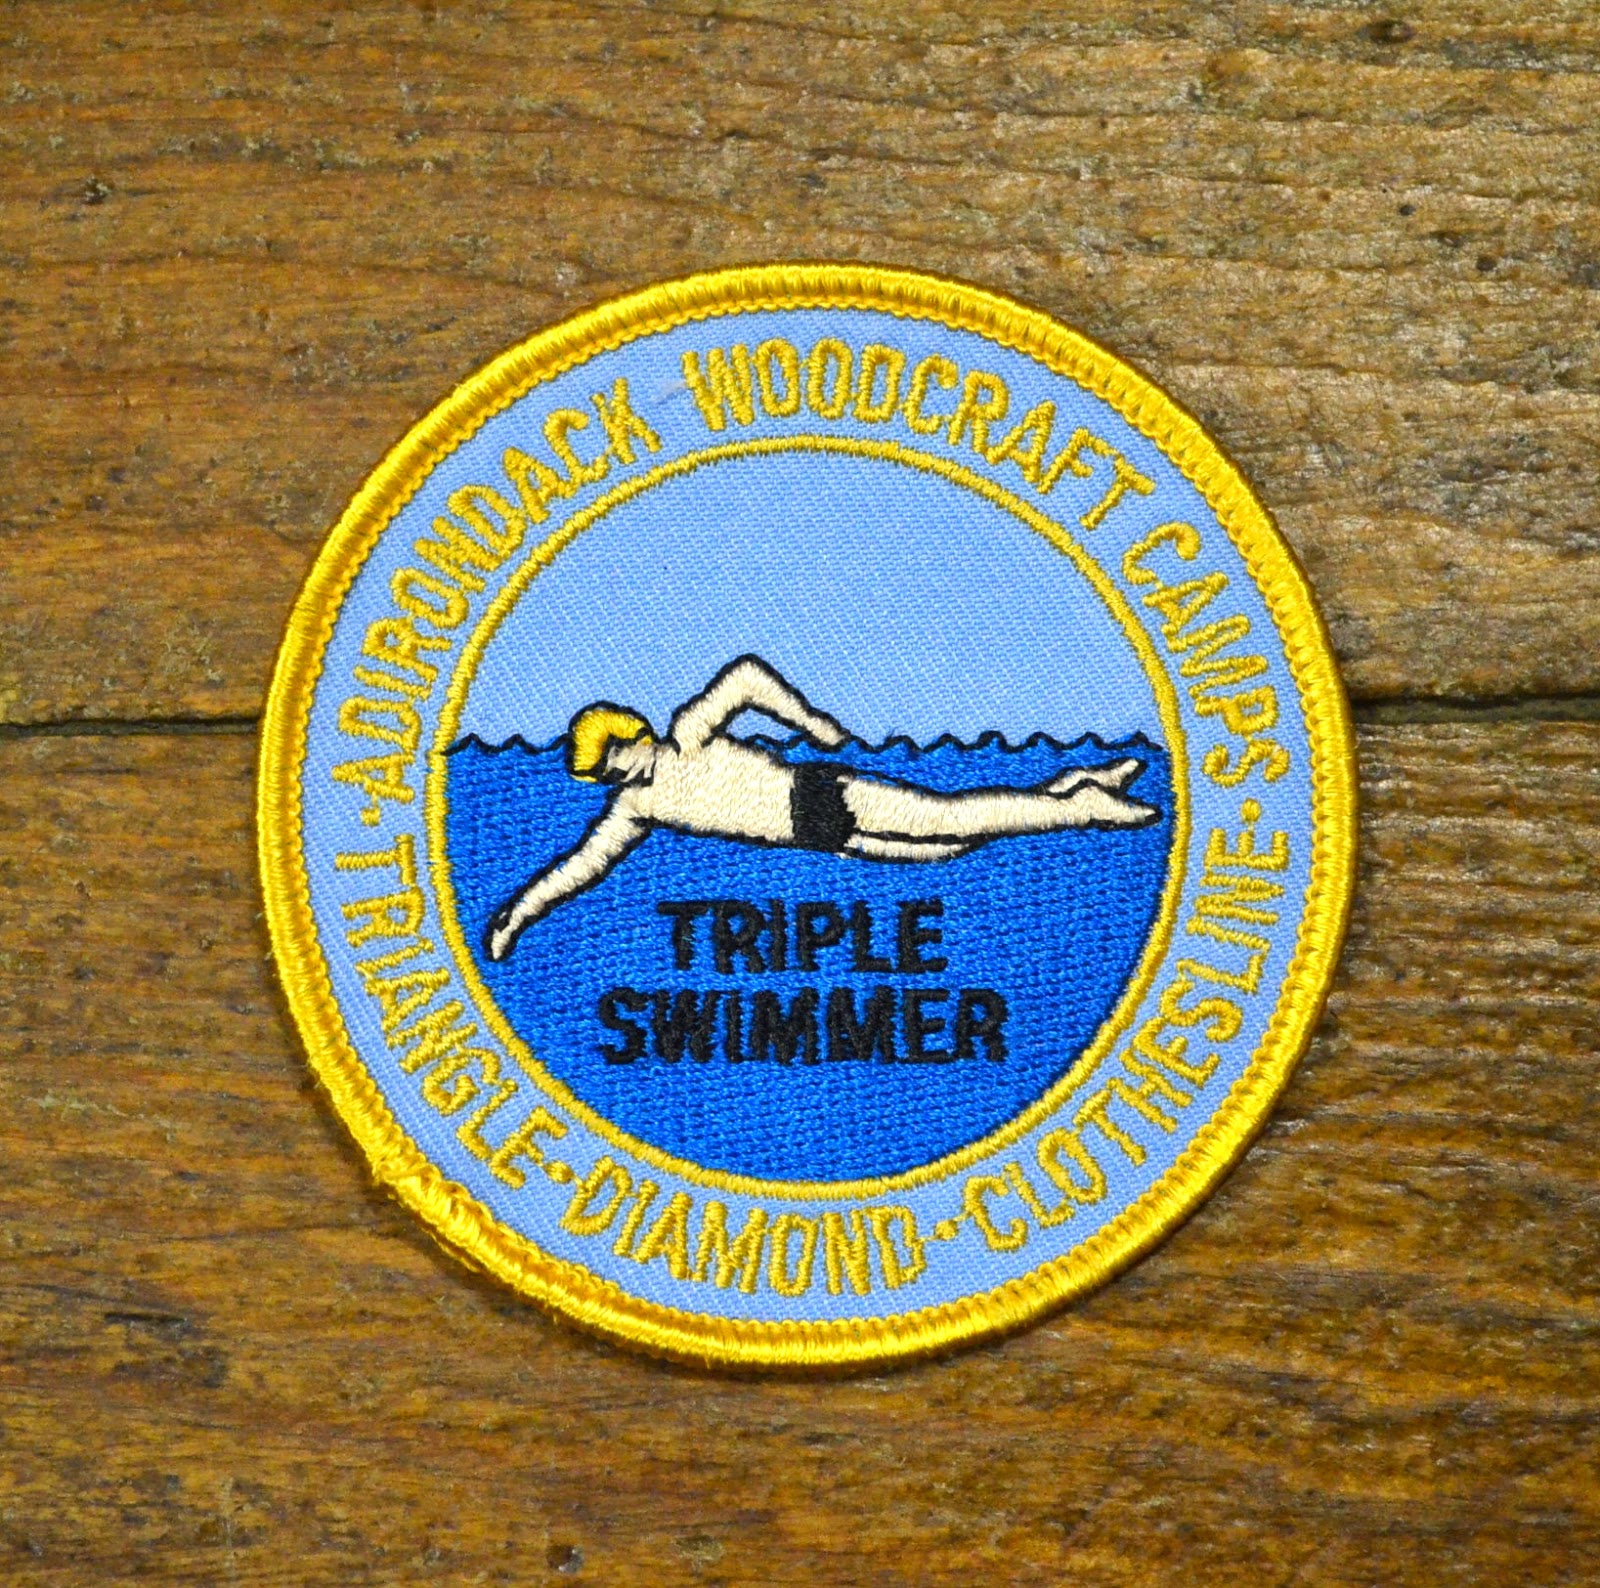 AWC_TripleSwimmer_Badge.jpg